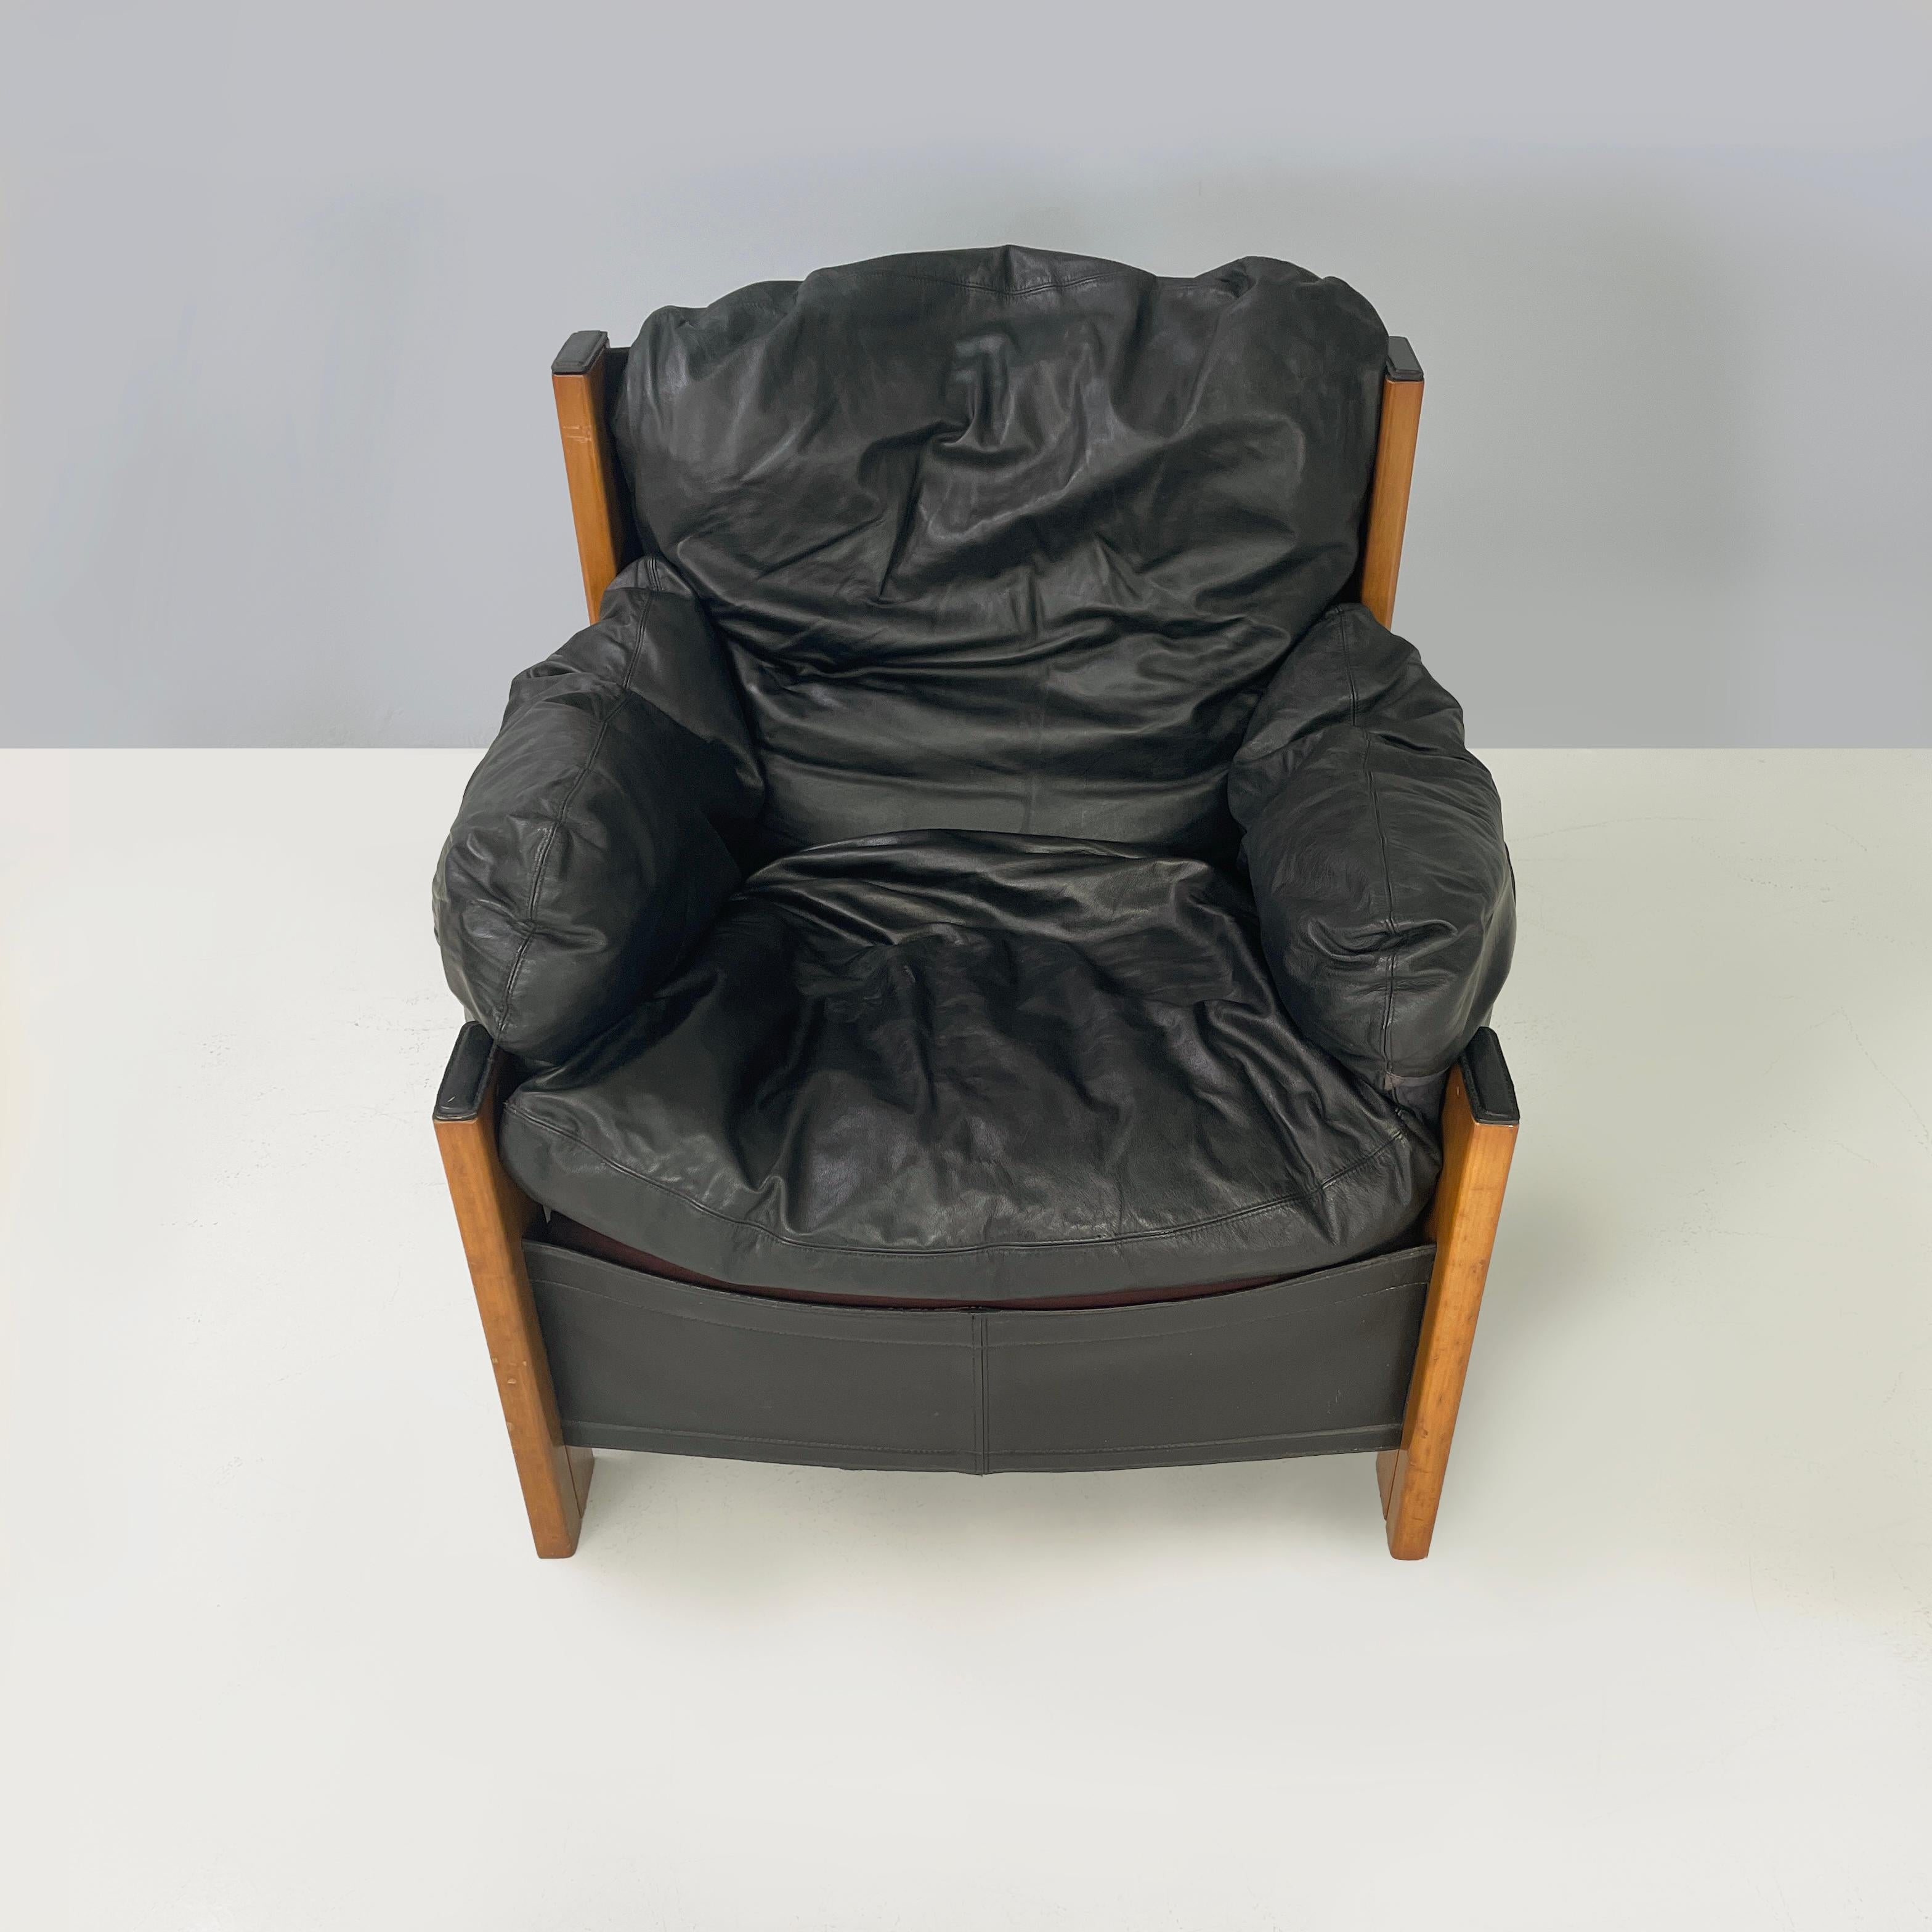 Late 20th Century Italian modern Black armchair Artona by Afra and Tobia Scarpa for Maxalto, 1970s For Sale